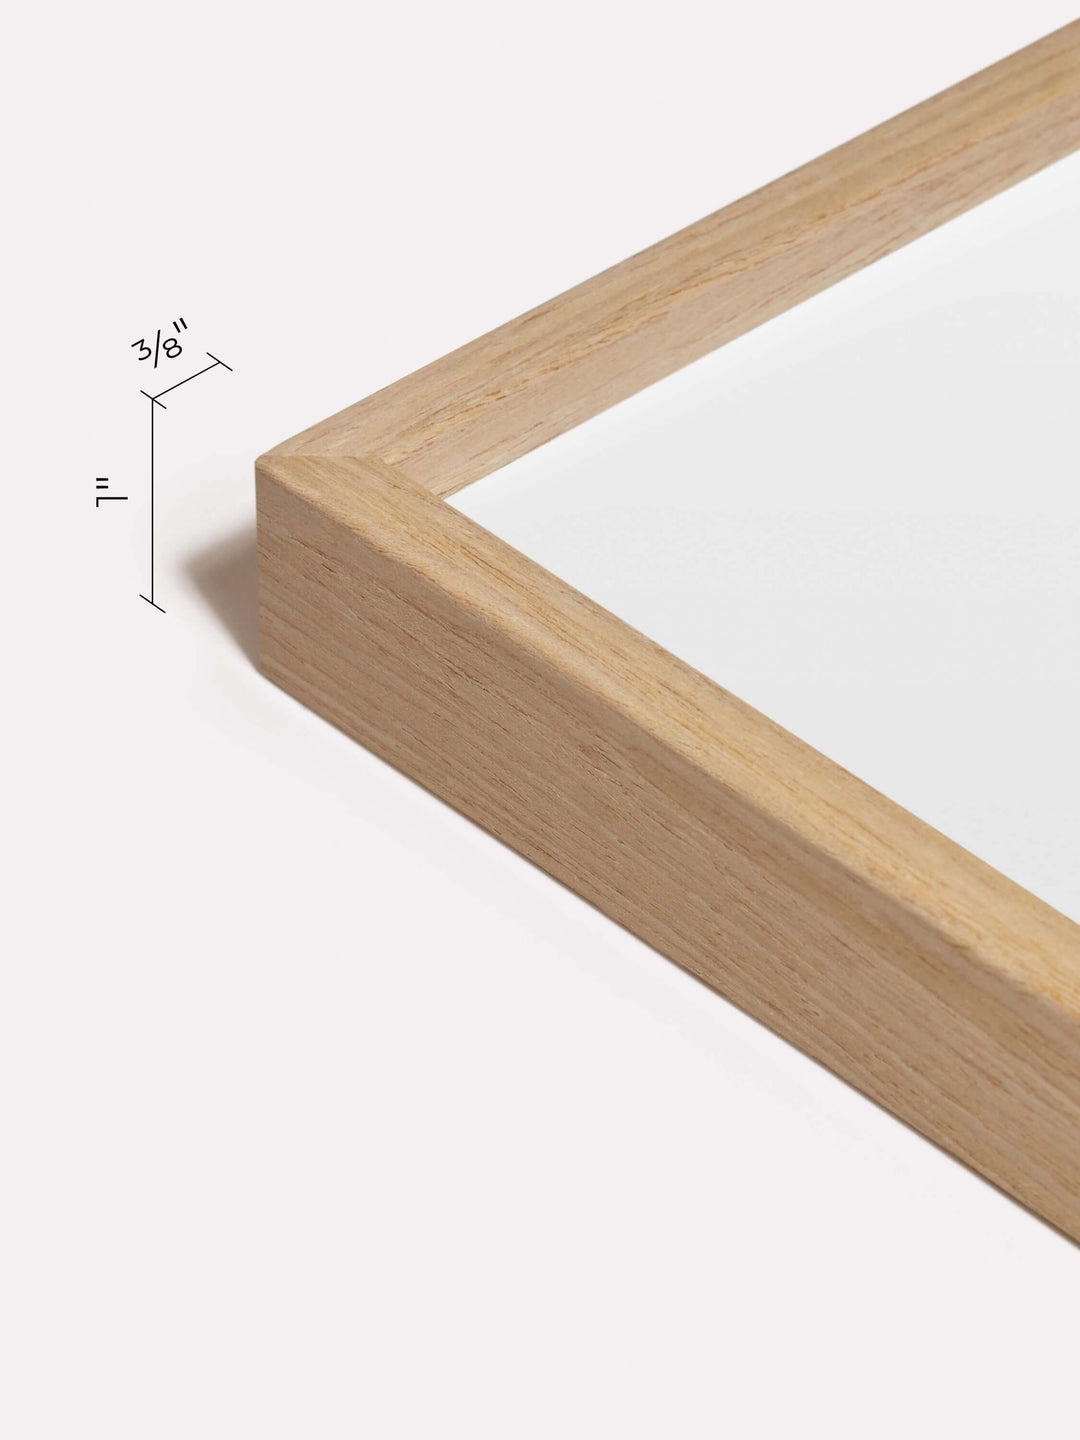 13x19-inch Thin Frame, Oak - Close-up view